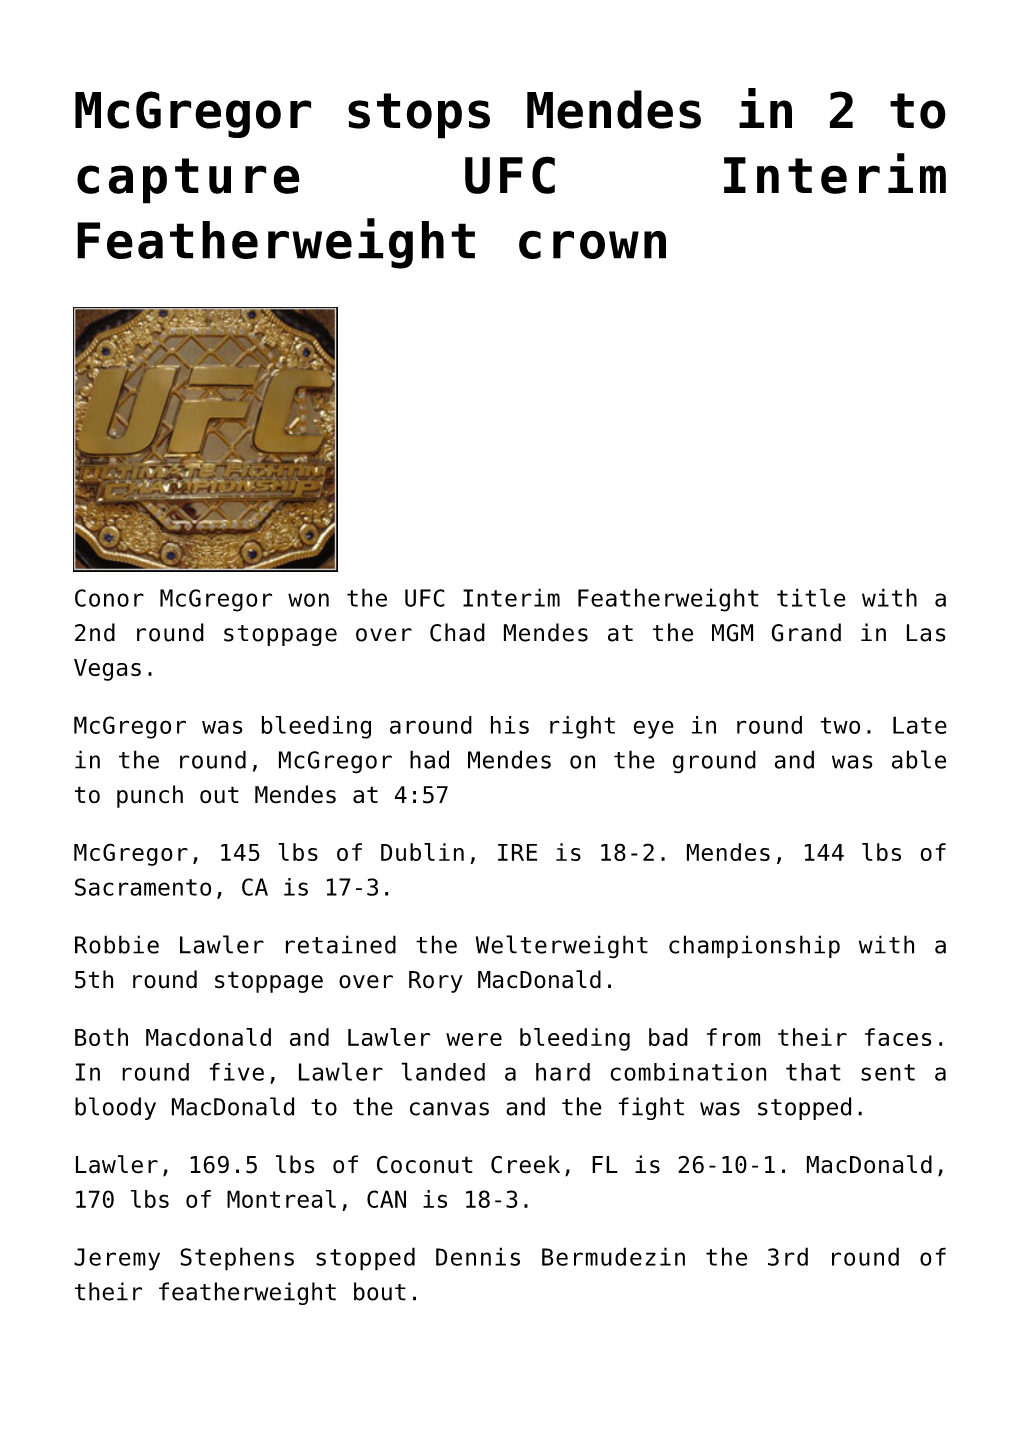 Mcgregor Stops Mendes in 2 to Capture UFC Interim Featherweight Crown